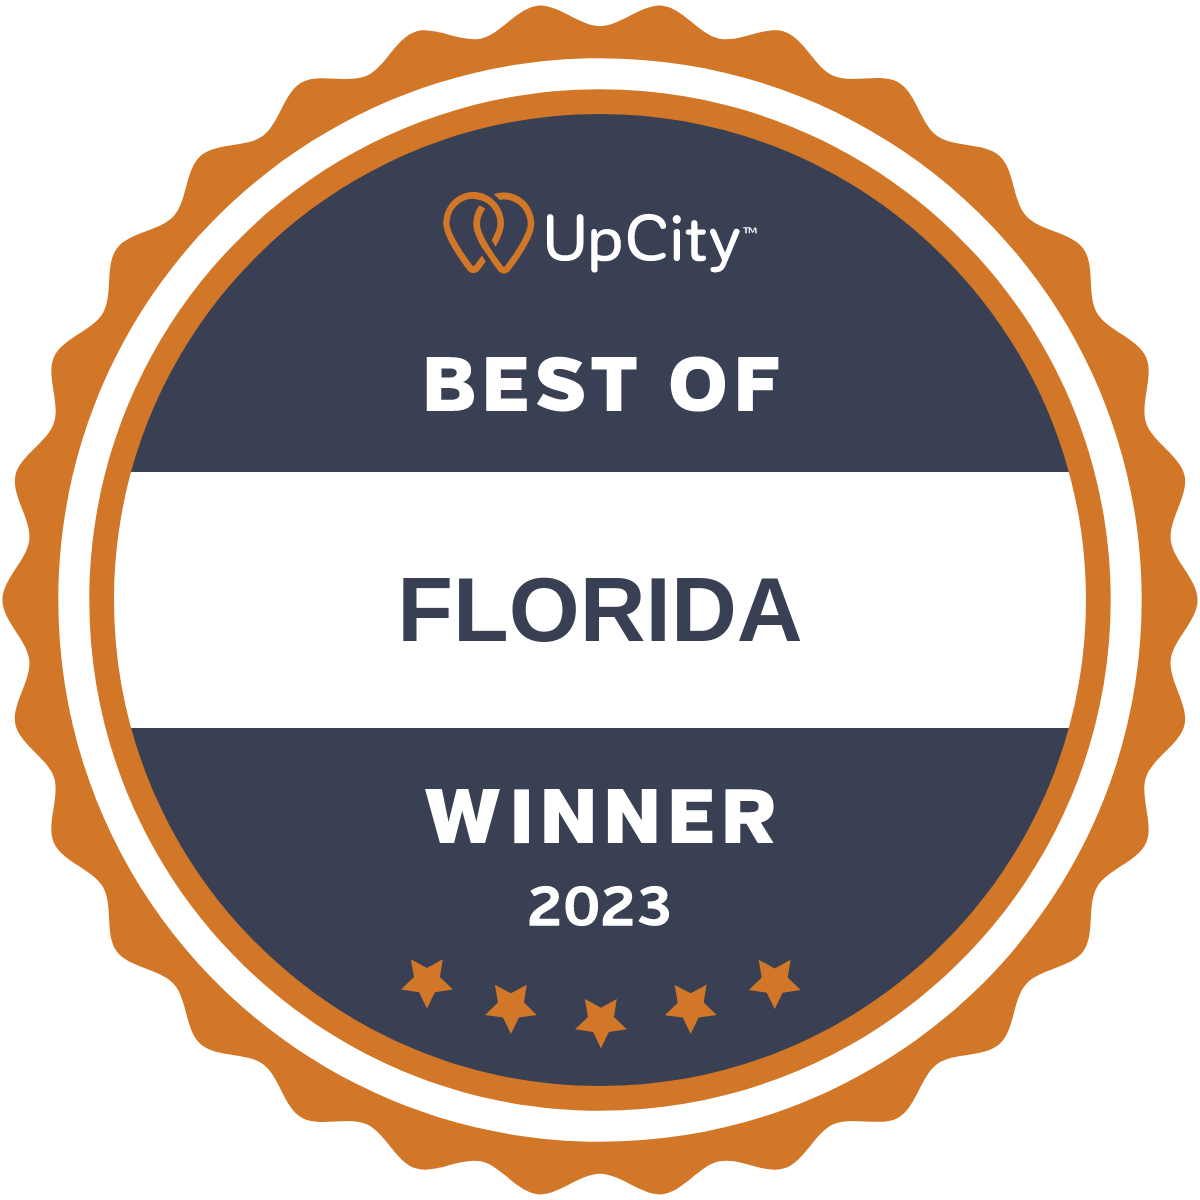 Upcity - Best of Florida Winner 2023